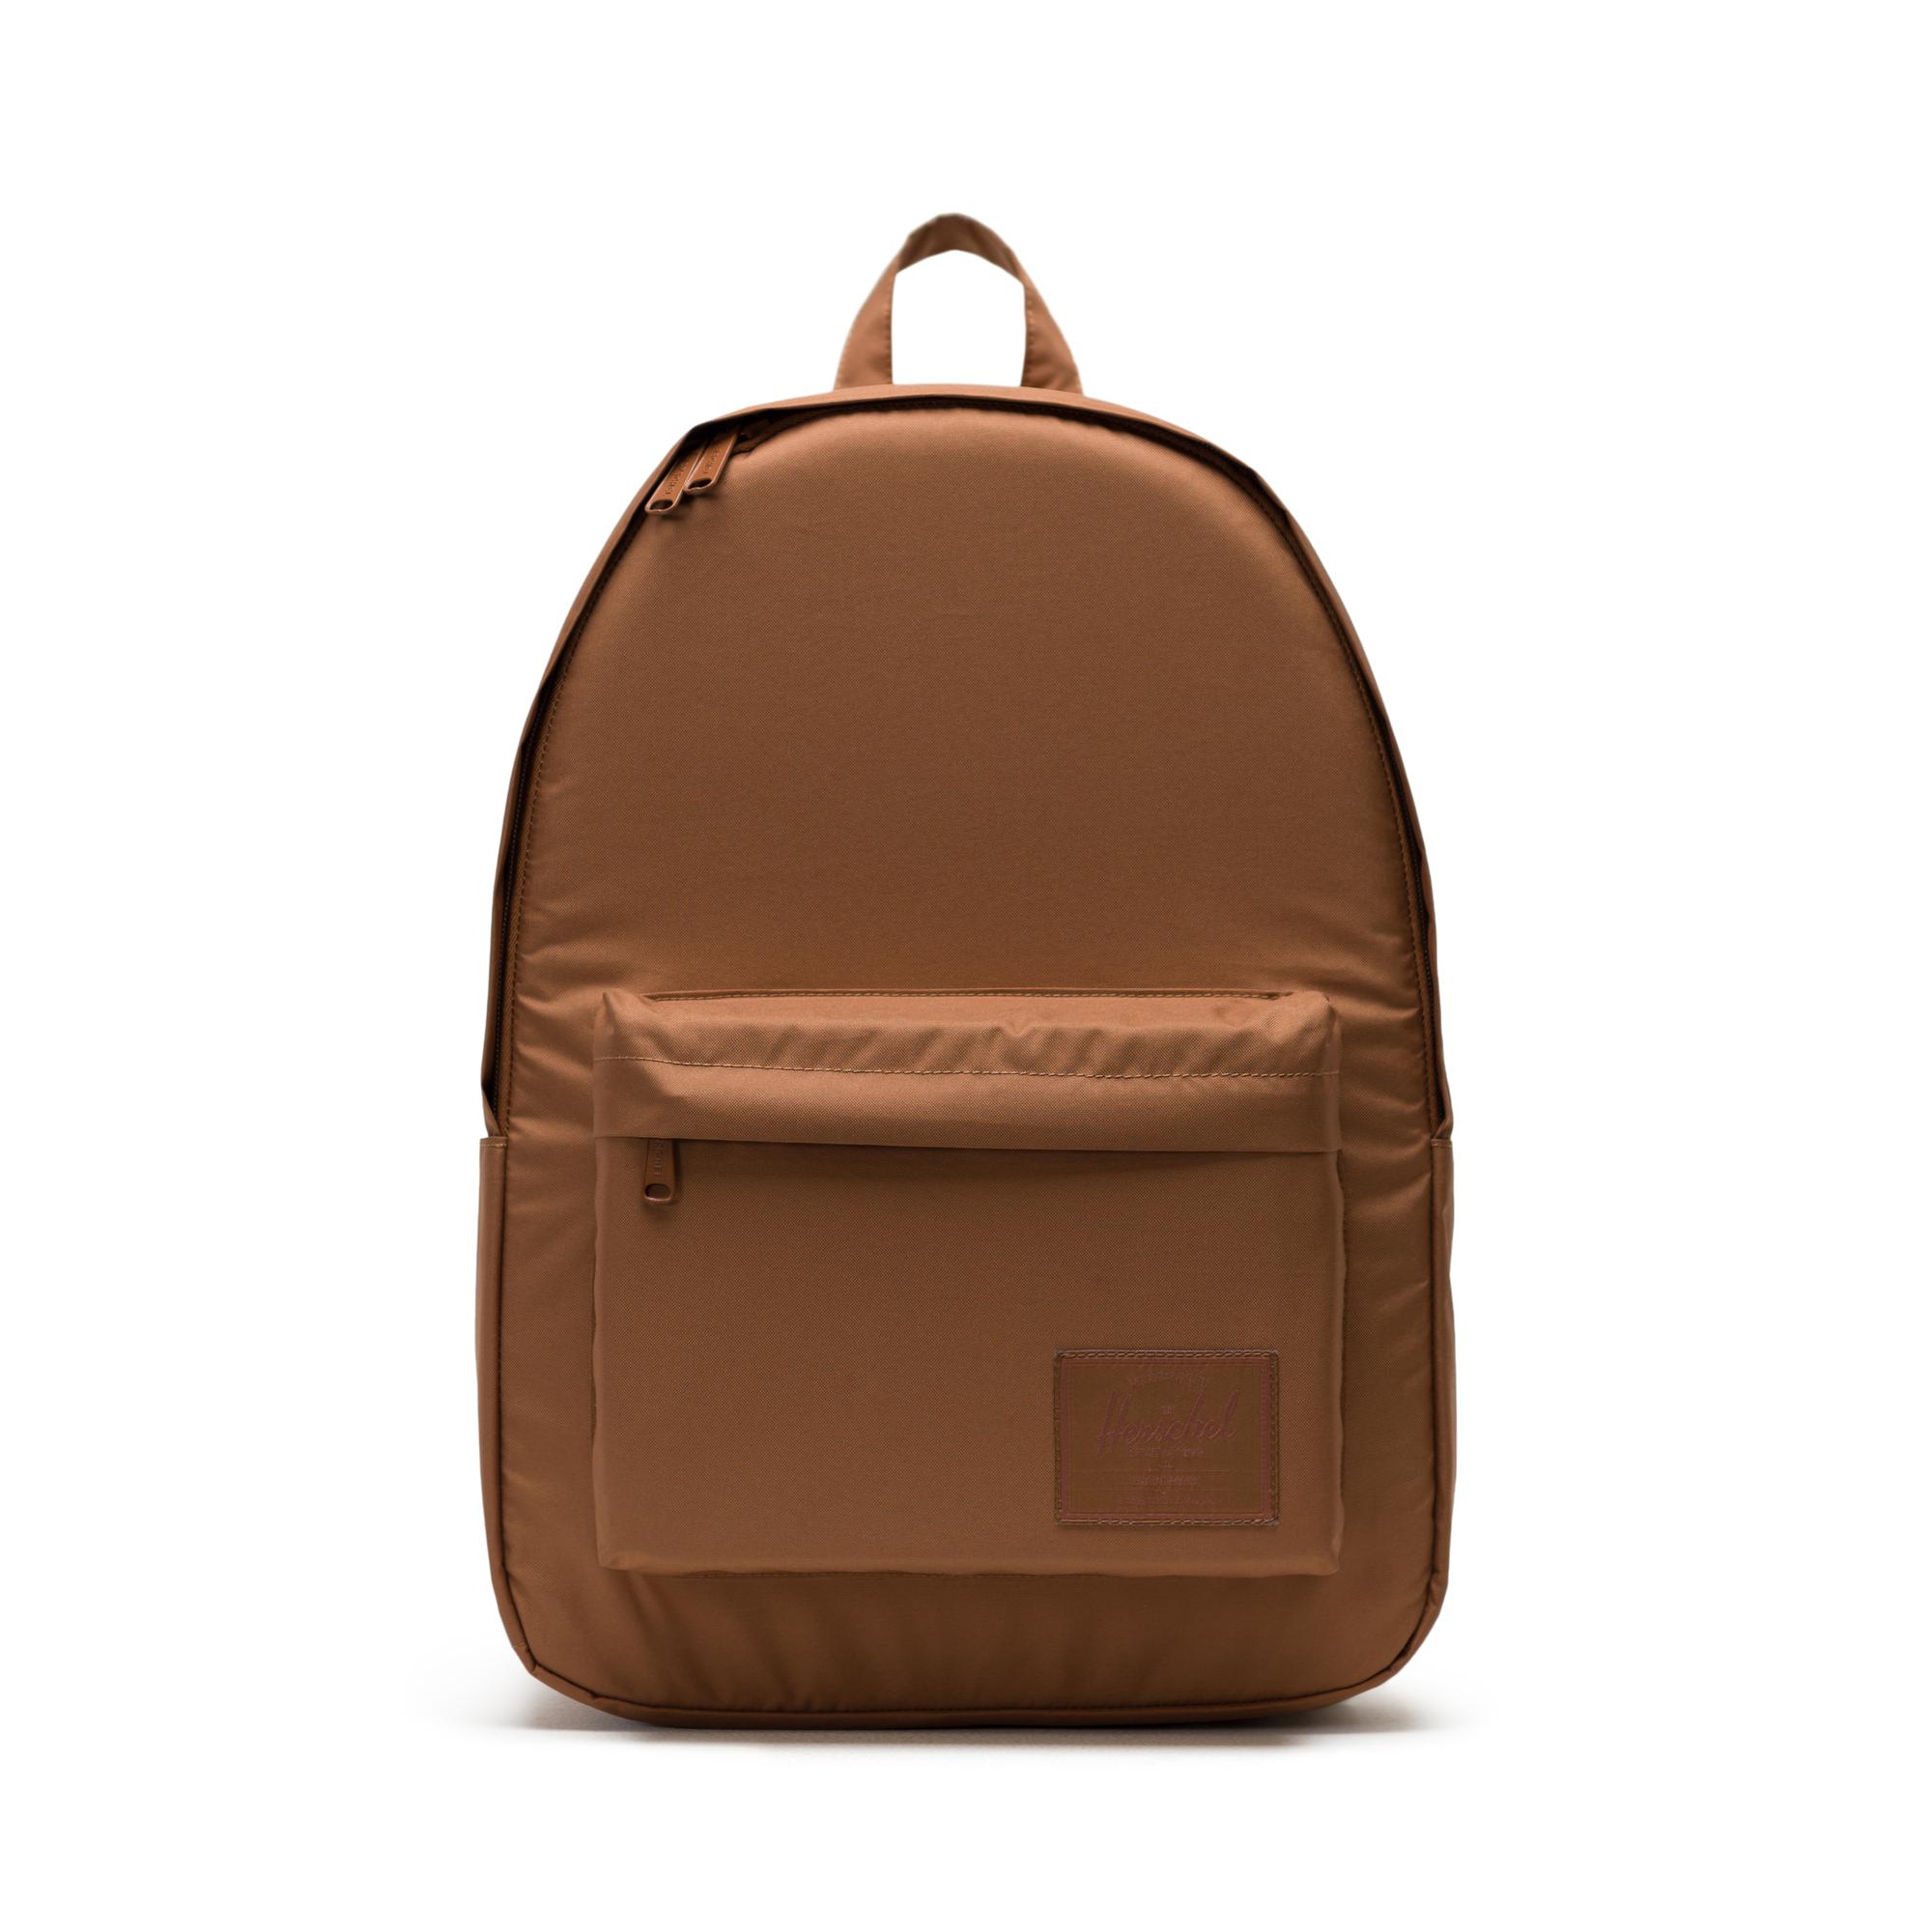 Classic Backpack XL Light | Herschel Supply Company